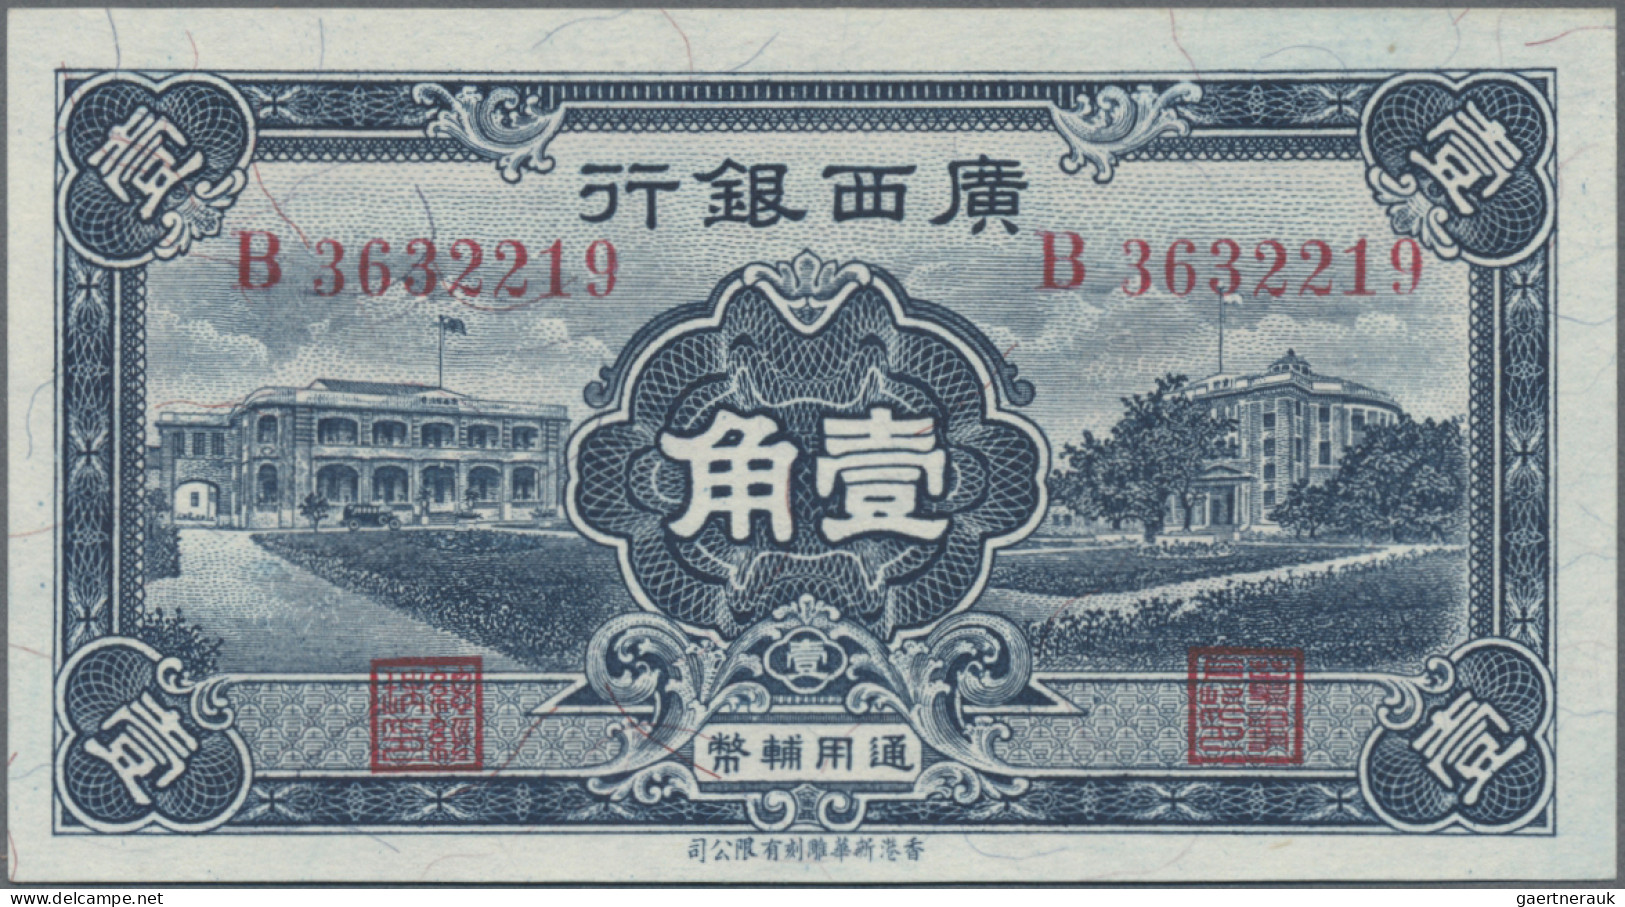 China: KWANGSI BANK, lot with 5 banknotes, series 1917-1936, with 10 Cents 1917